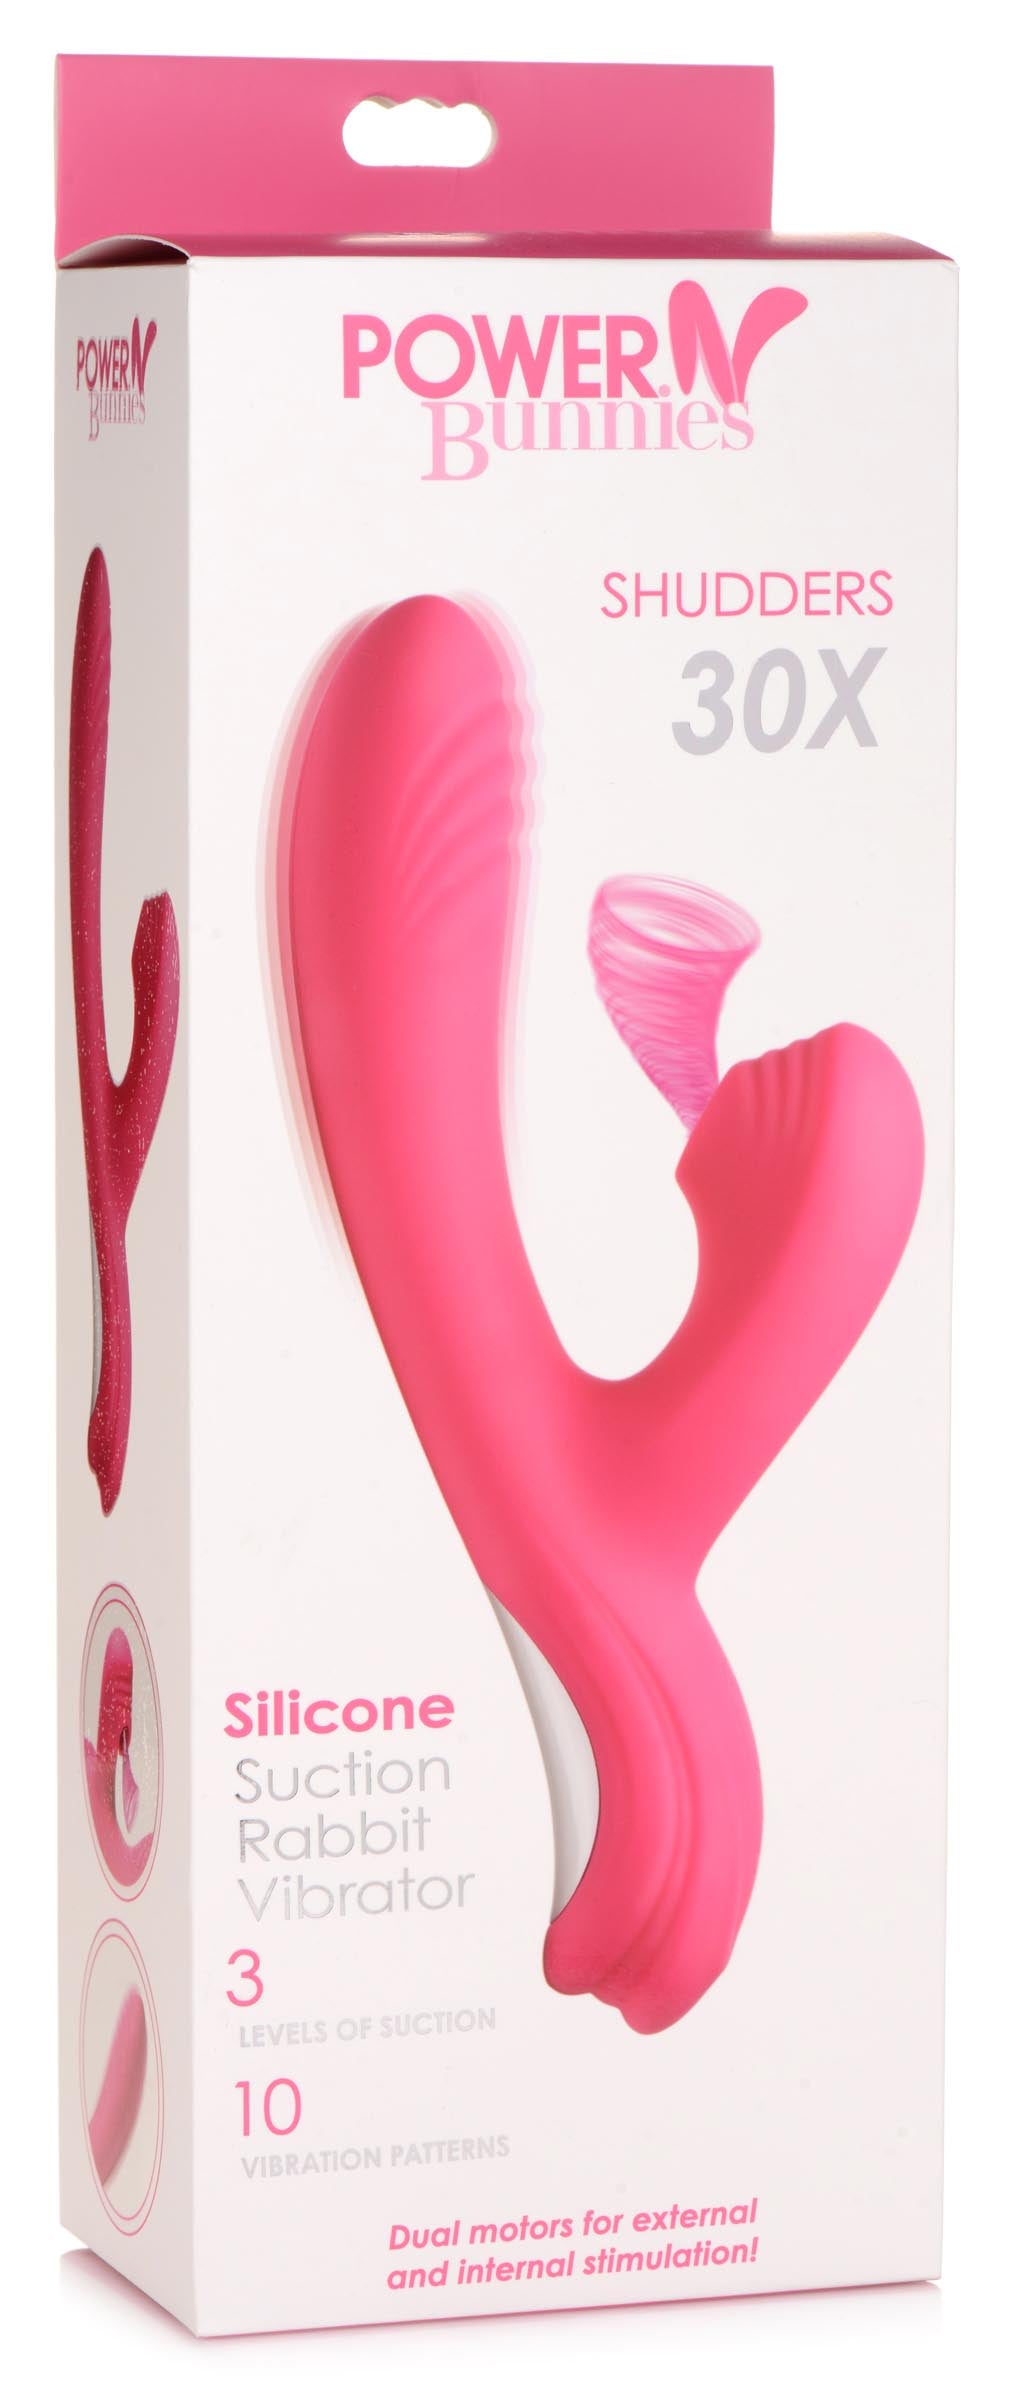 Shudders 30X Silicone Suction Rabbit Vibrator